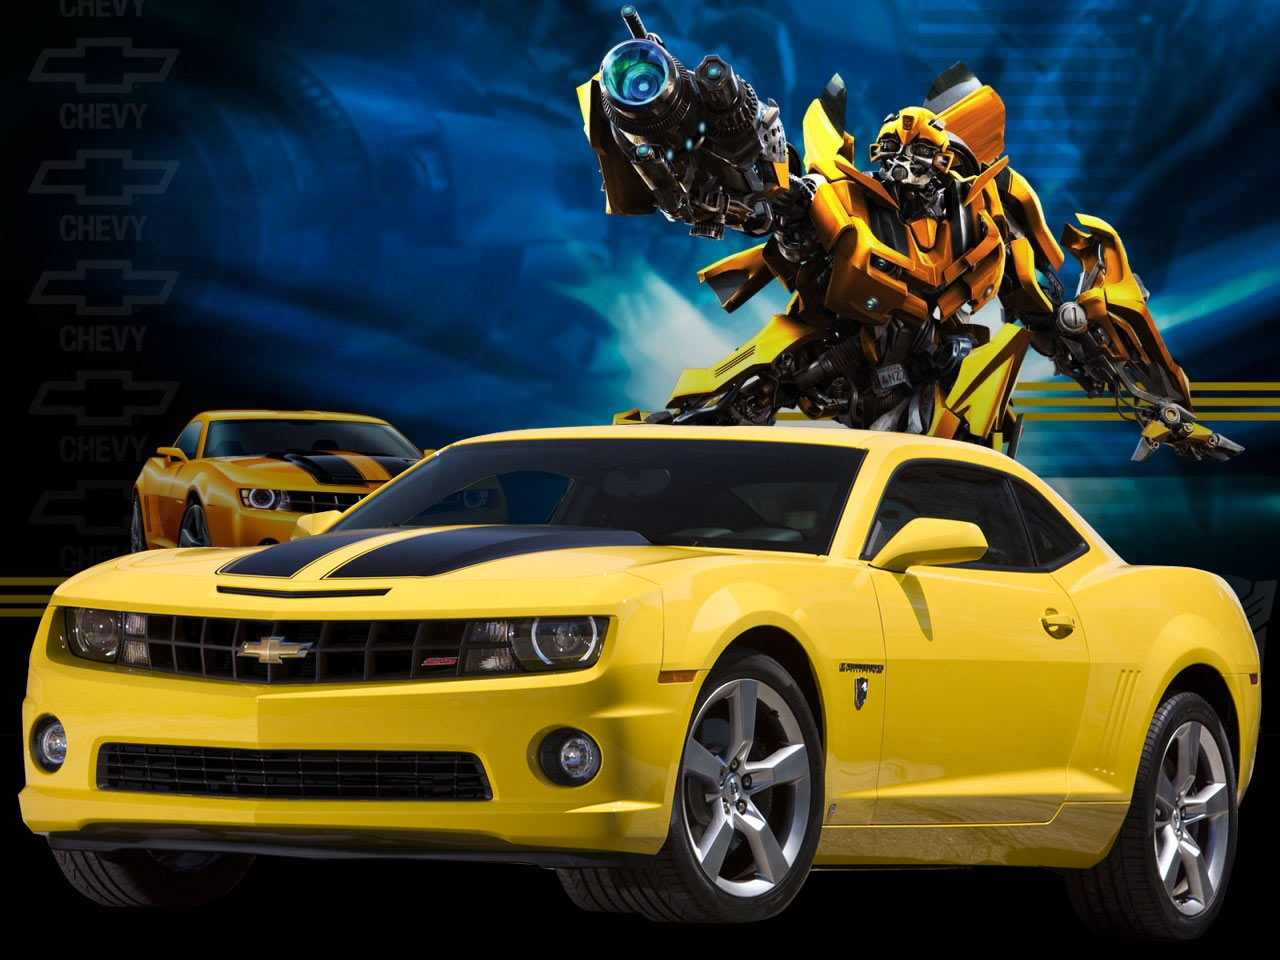 Bumblebee - The Transformers Wallpaper 36901555 - Fanpop